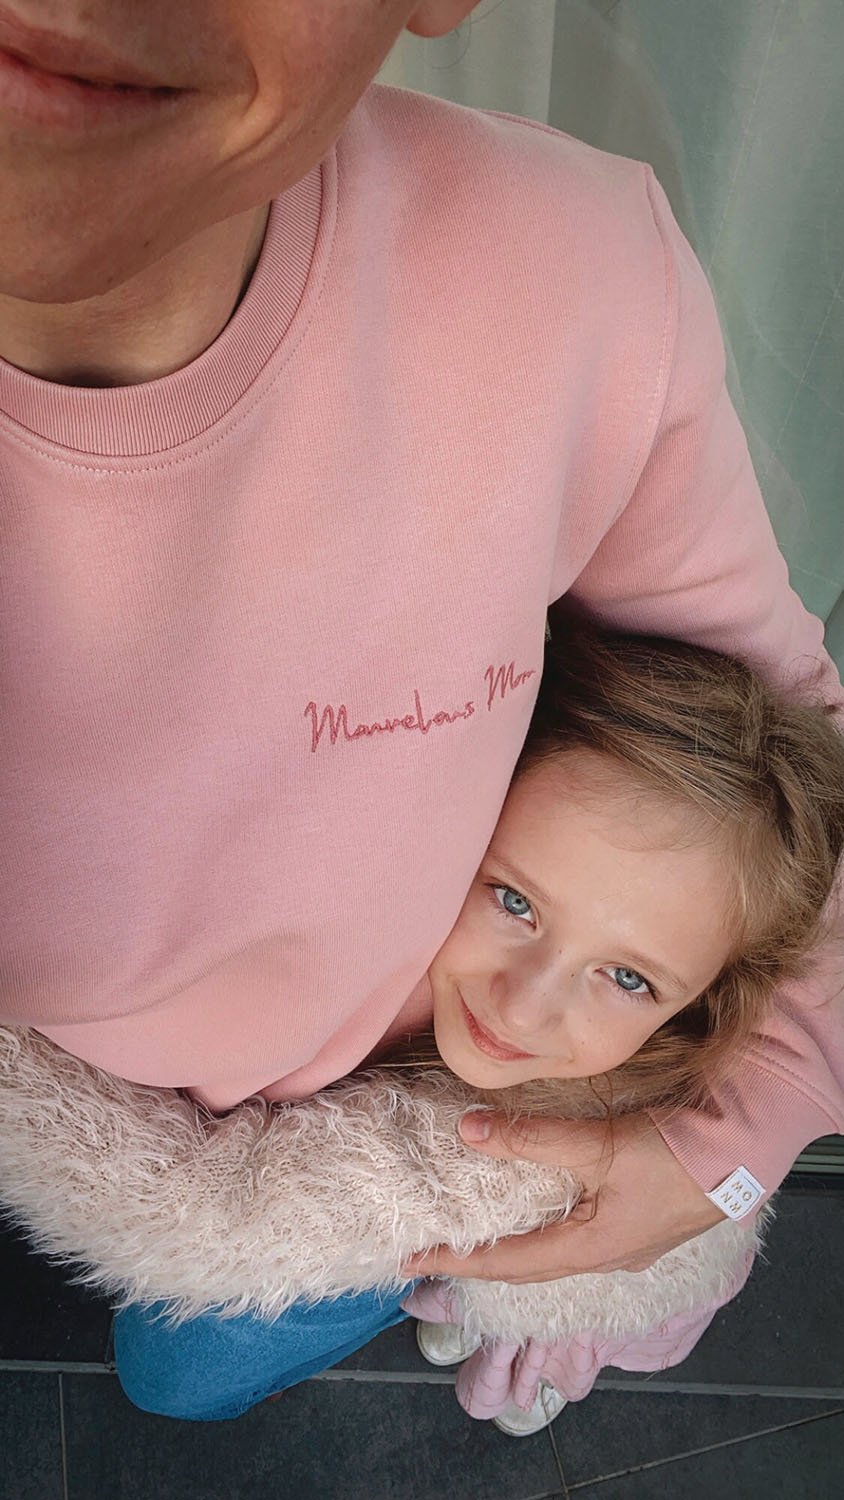 Marvelous Mom sweater by Mangos on Monday-Mom-MonM-LeenDictus3